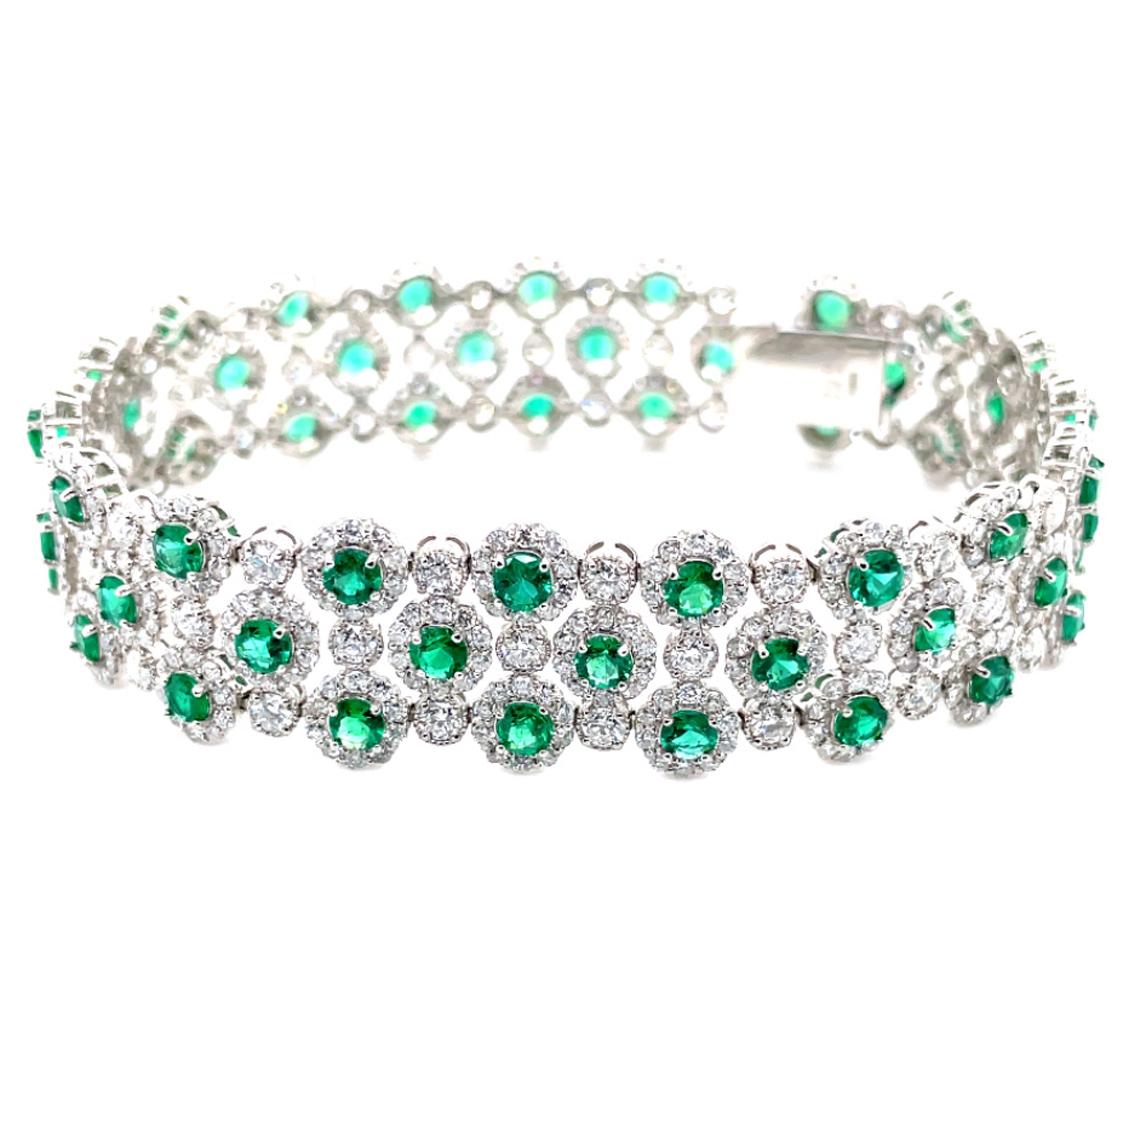 Women's 5.19 Carat Natural Round Cut Emeralds and Diamonds Bracelet Set in Platinum